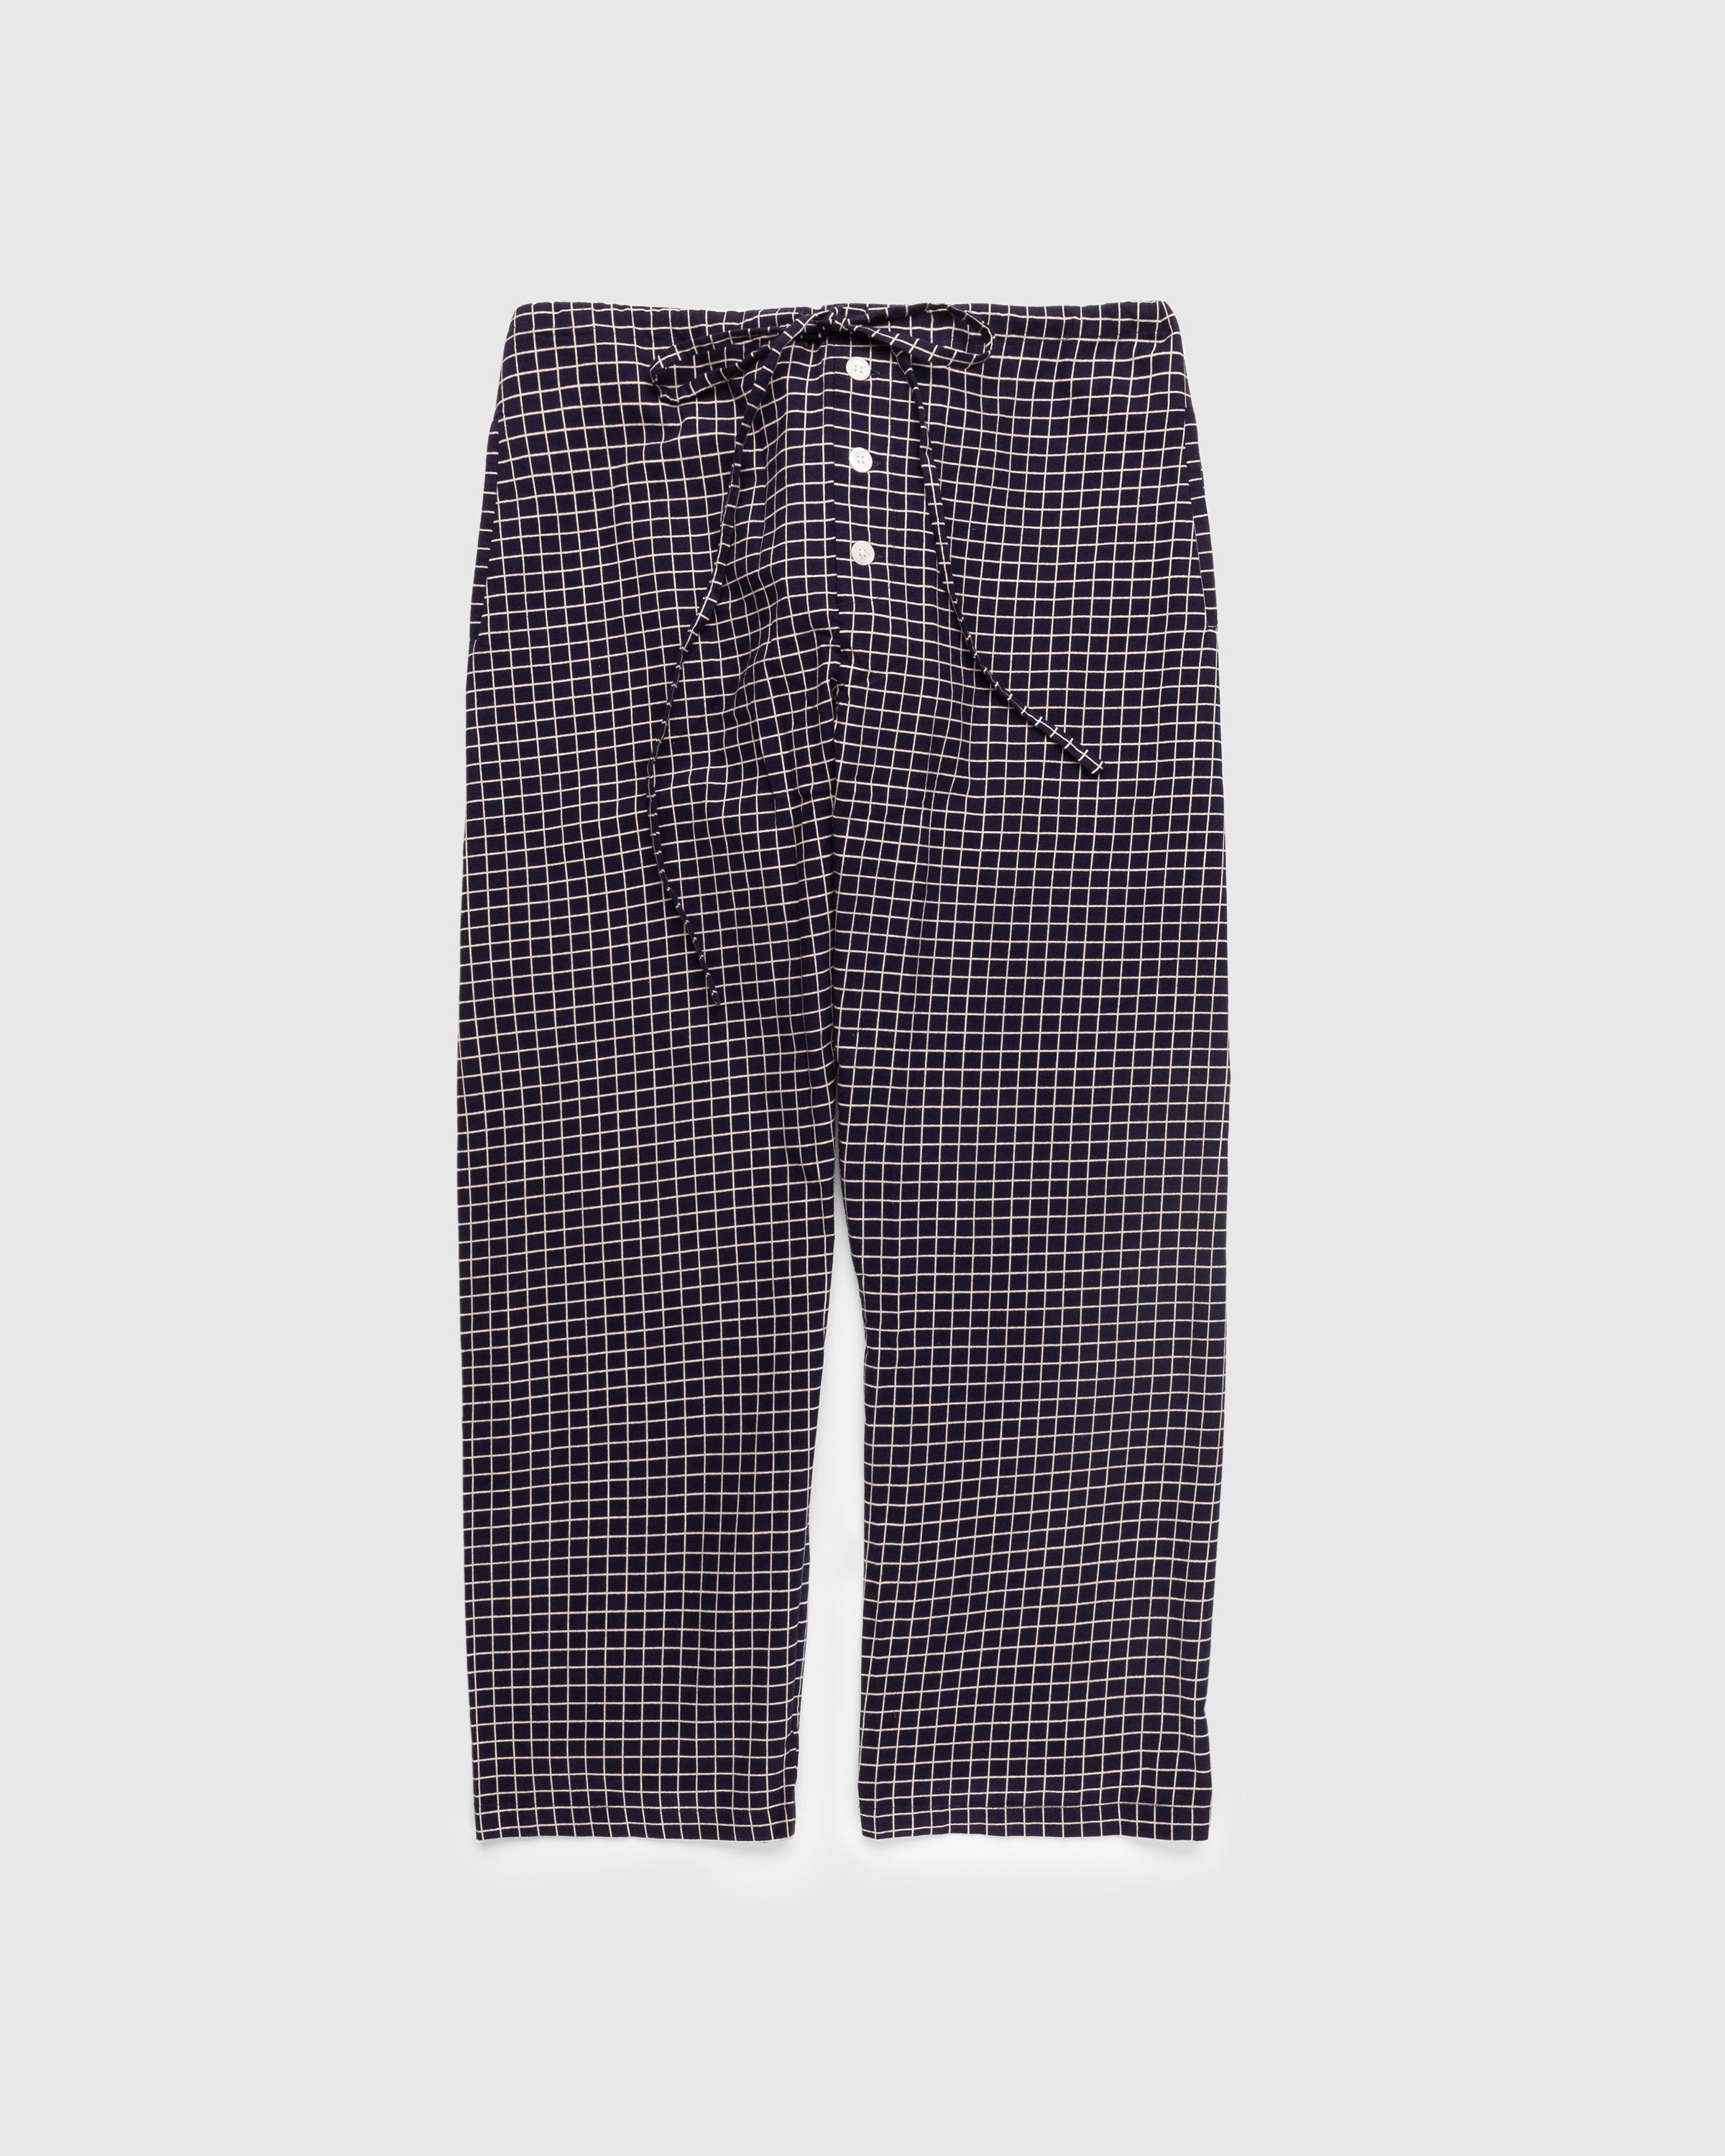 Bode - Midnight Grid Pajama Pant - Clothing - Blue - Image 1